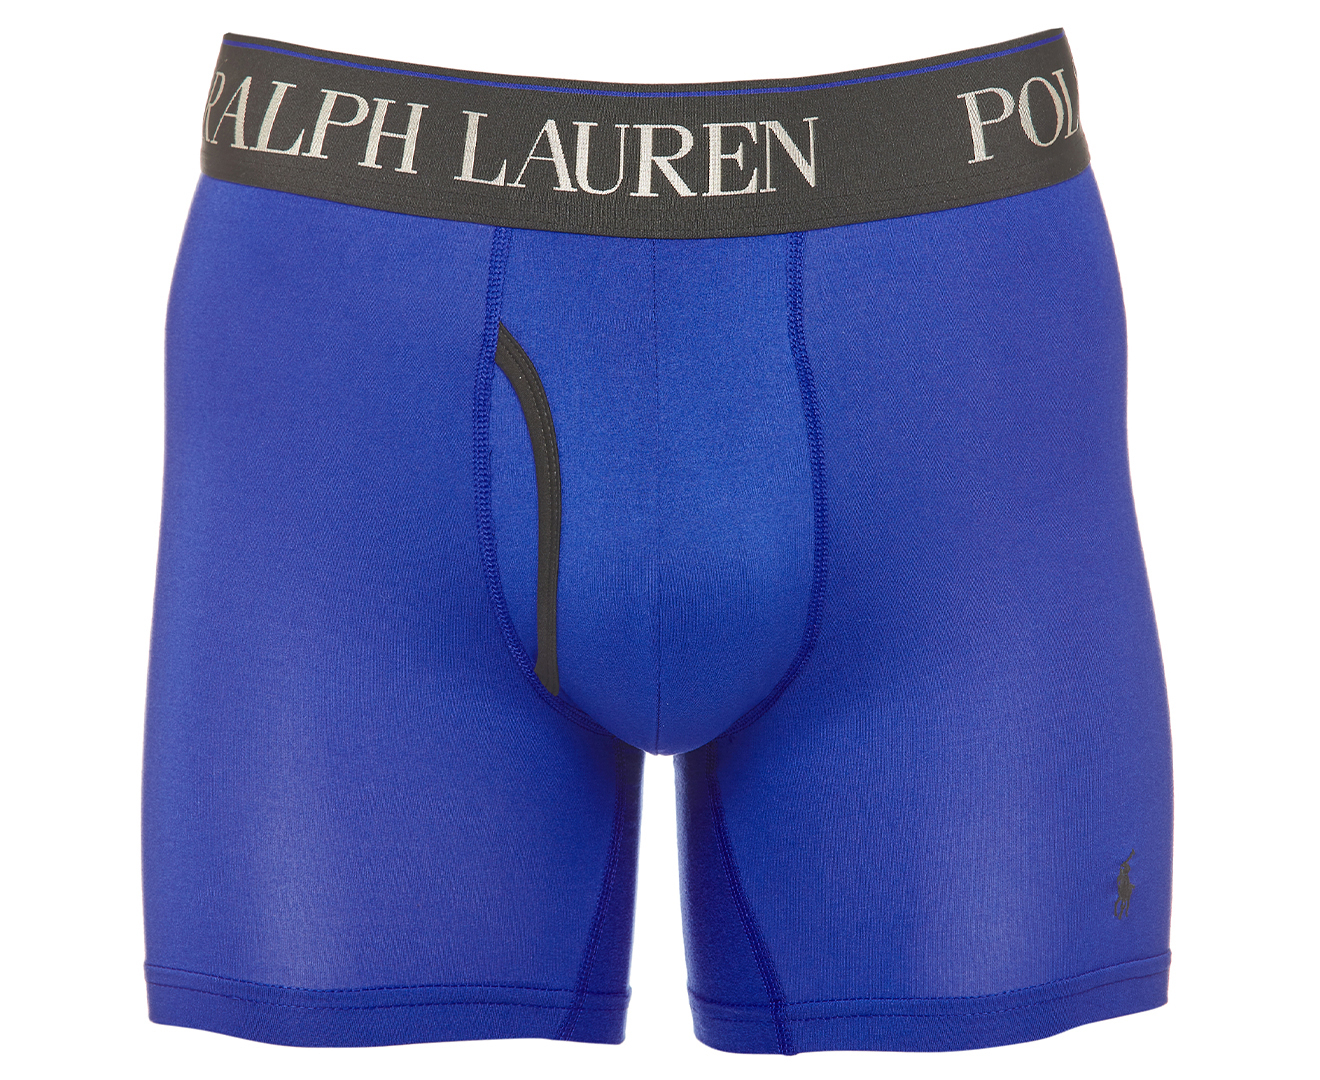  Polo Ralph Lauren Men's Six-Pack Boxer Briefs - Blue